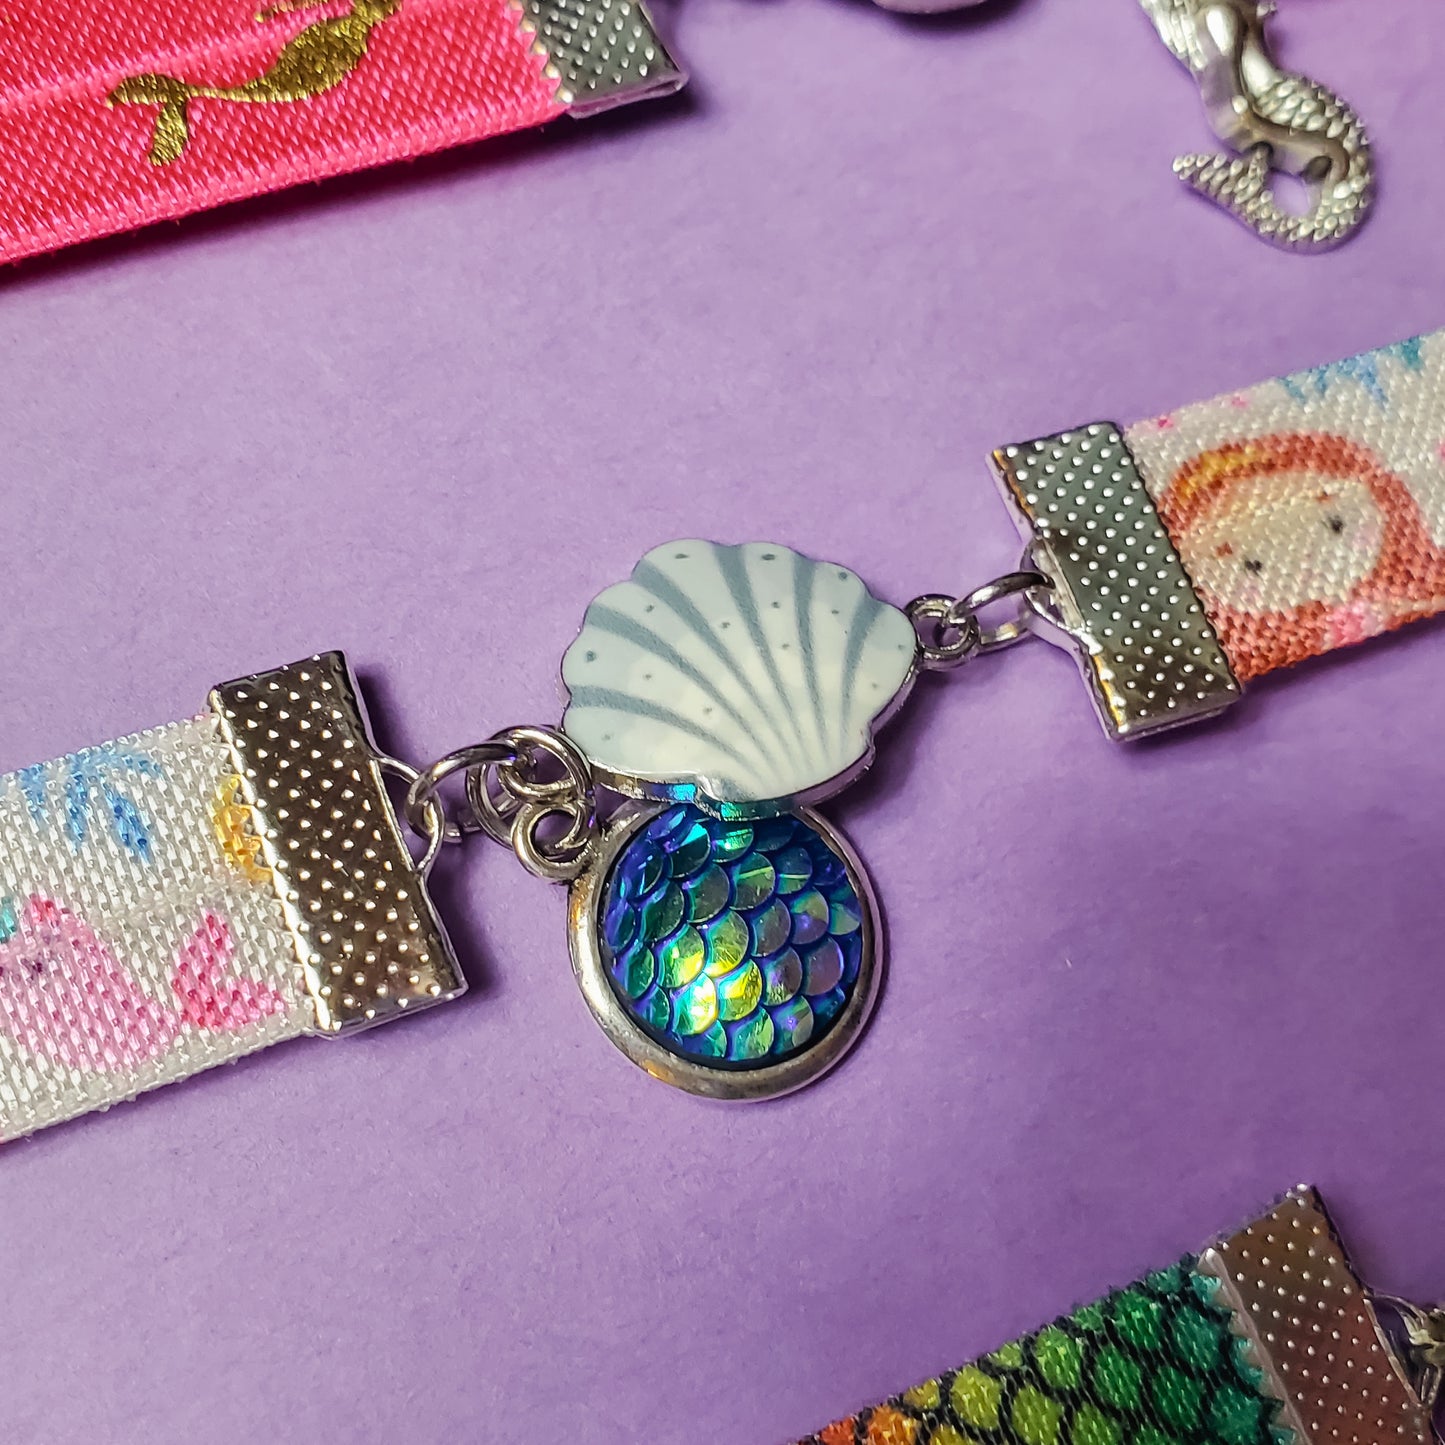 Mermaid and Seashell Inspired Elastic Bookmarks